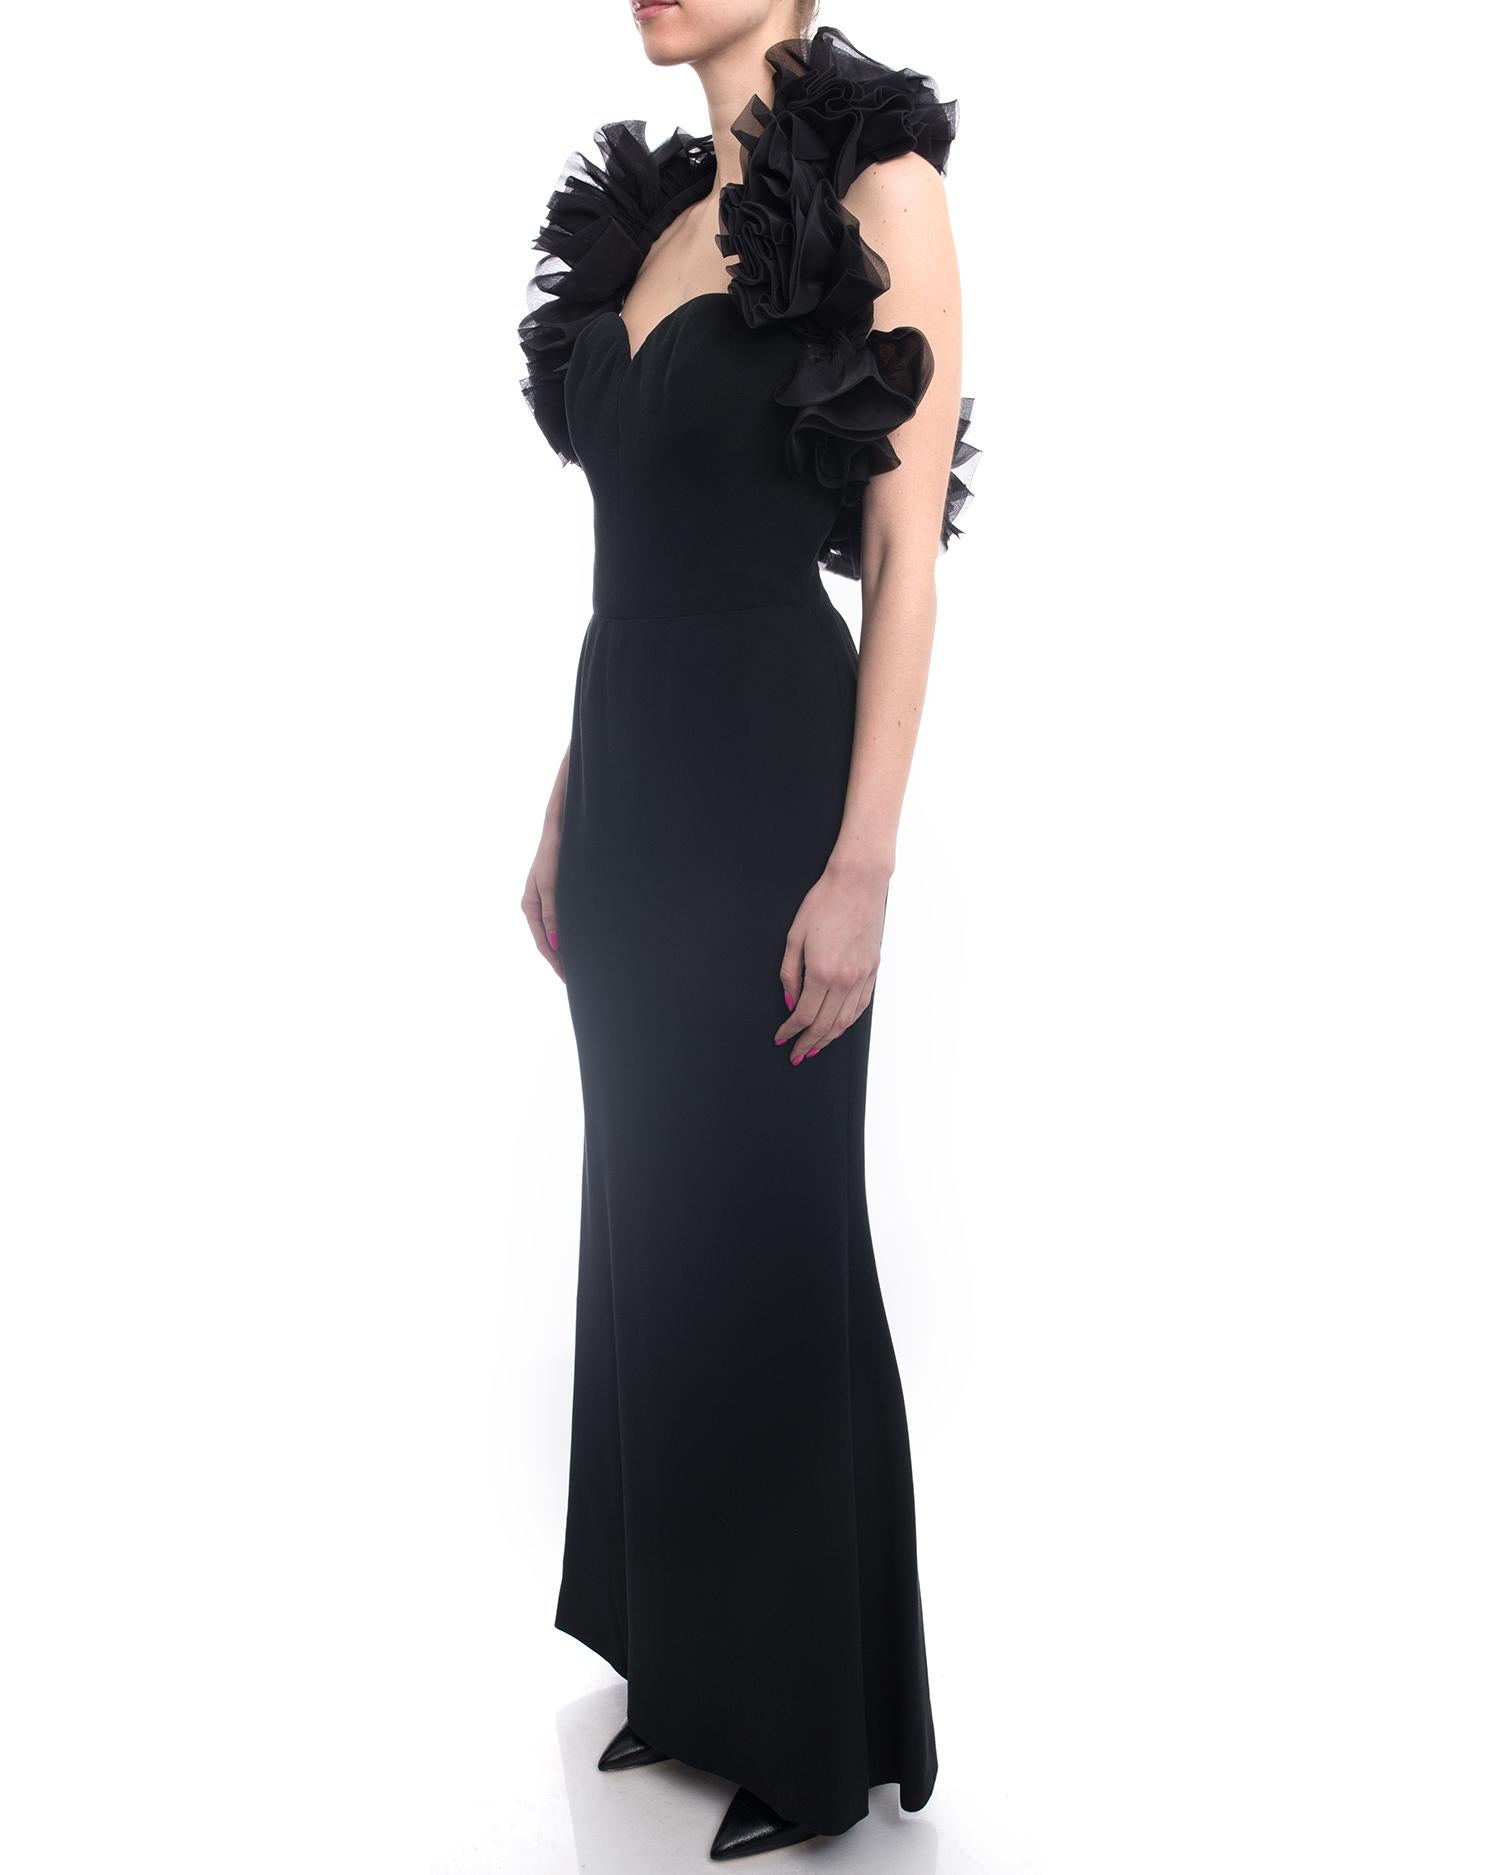 Yves Saint Laurent Haute Couture Vintage 1990’s Black Ruffle Evening Gown For Sale 2